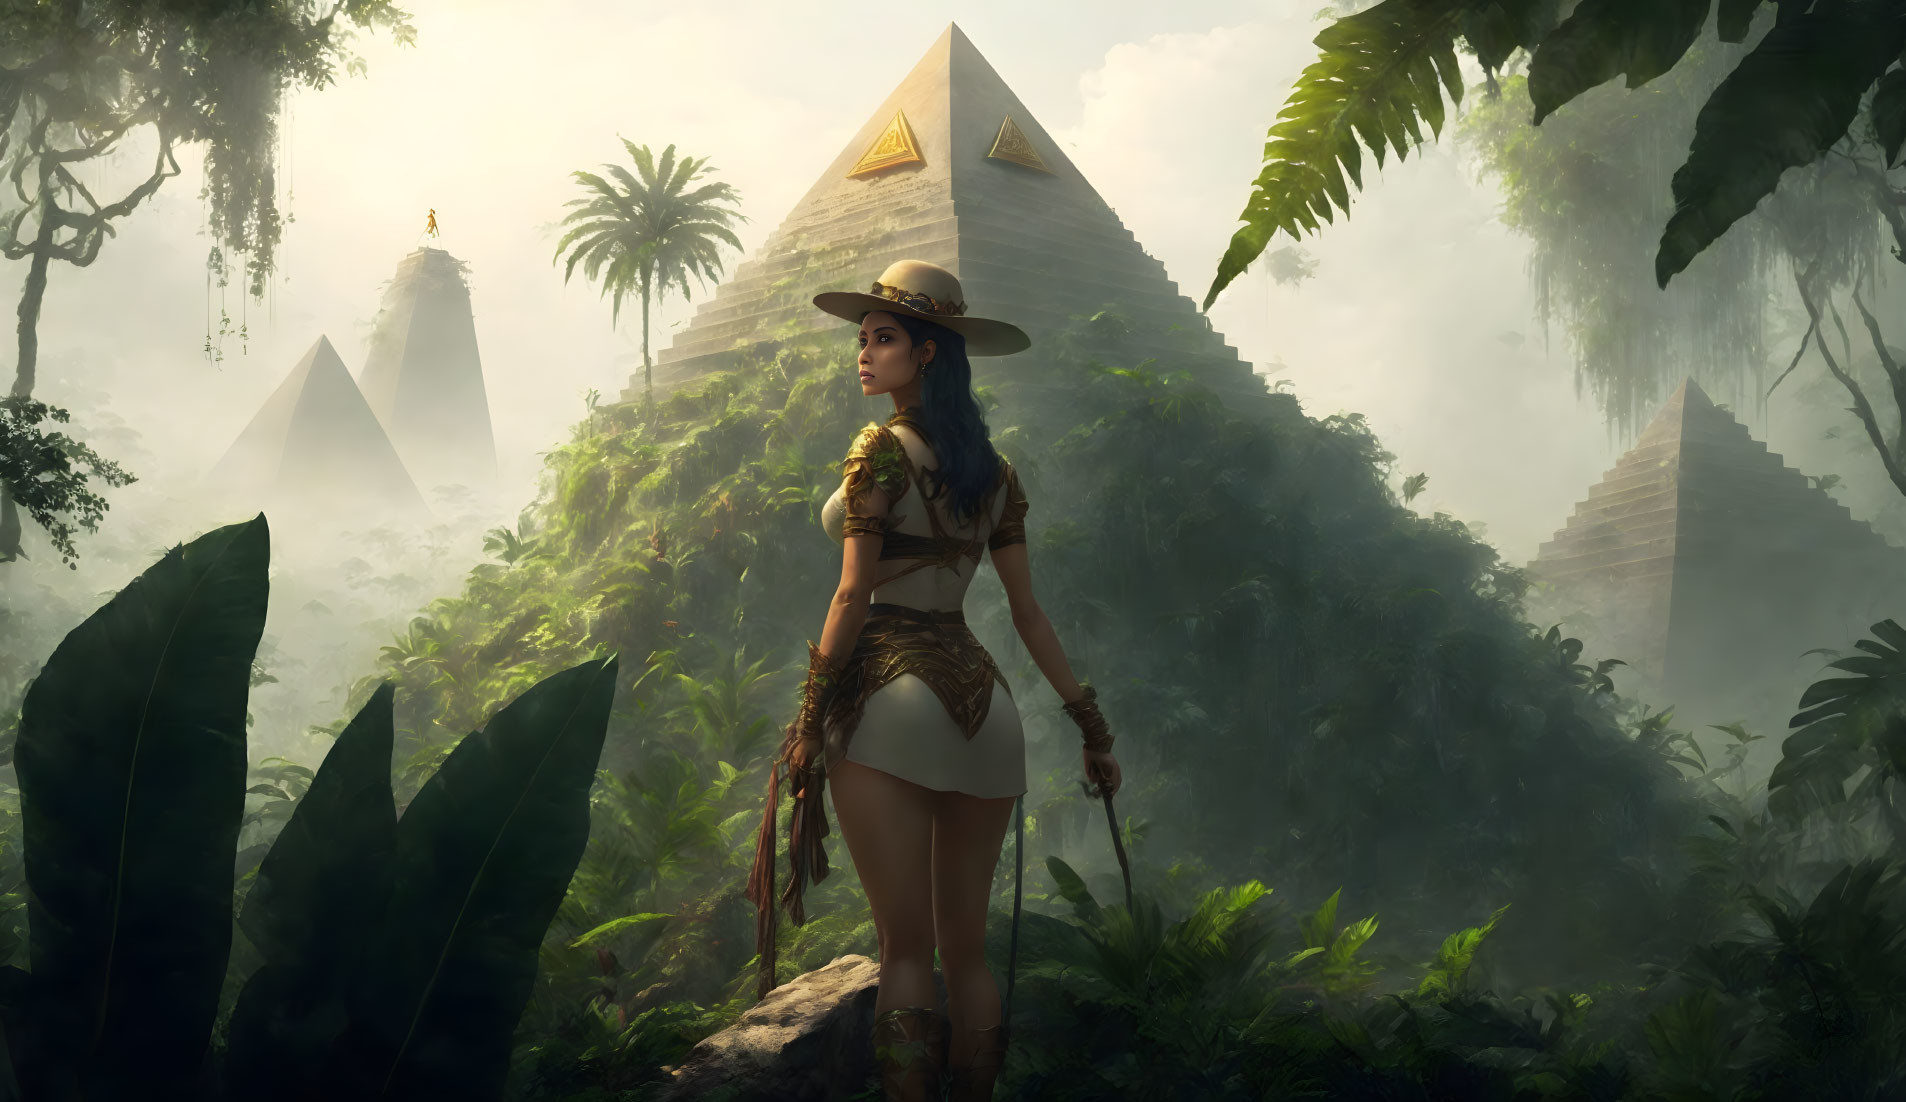 Female explorer discovering pyramids in the jungle